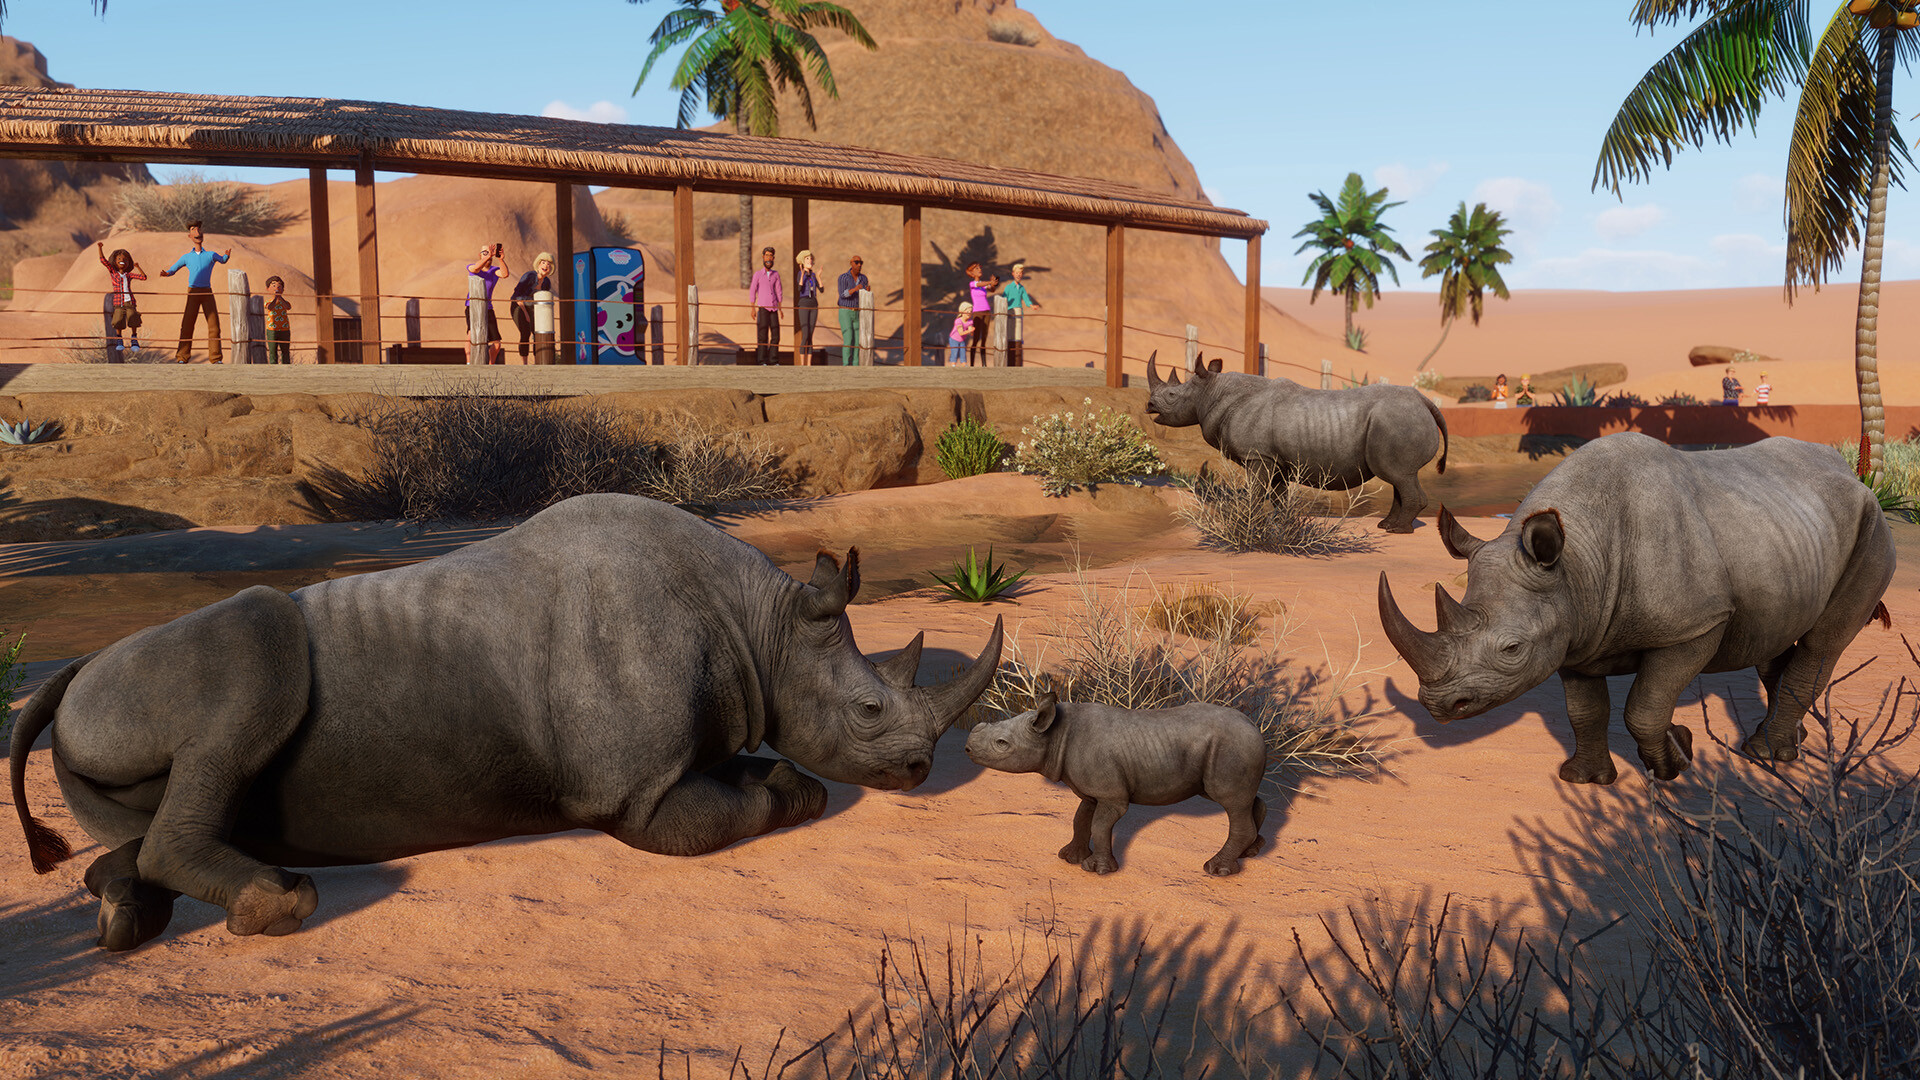 Planet Zoo: Arid Animal Pack on Steam